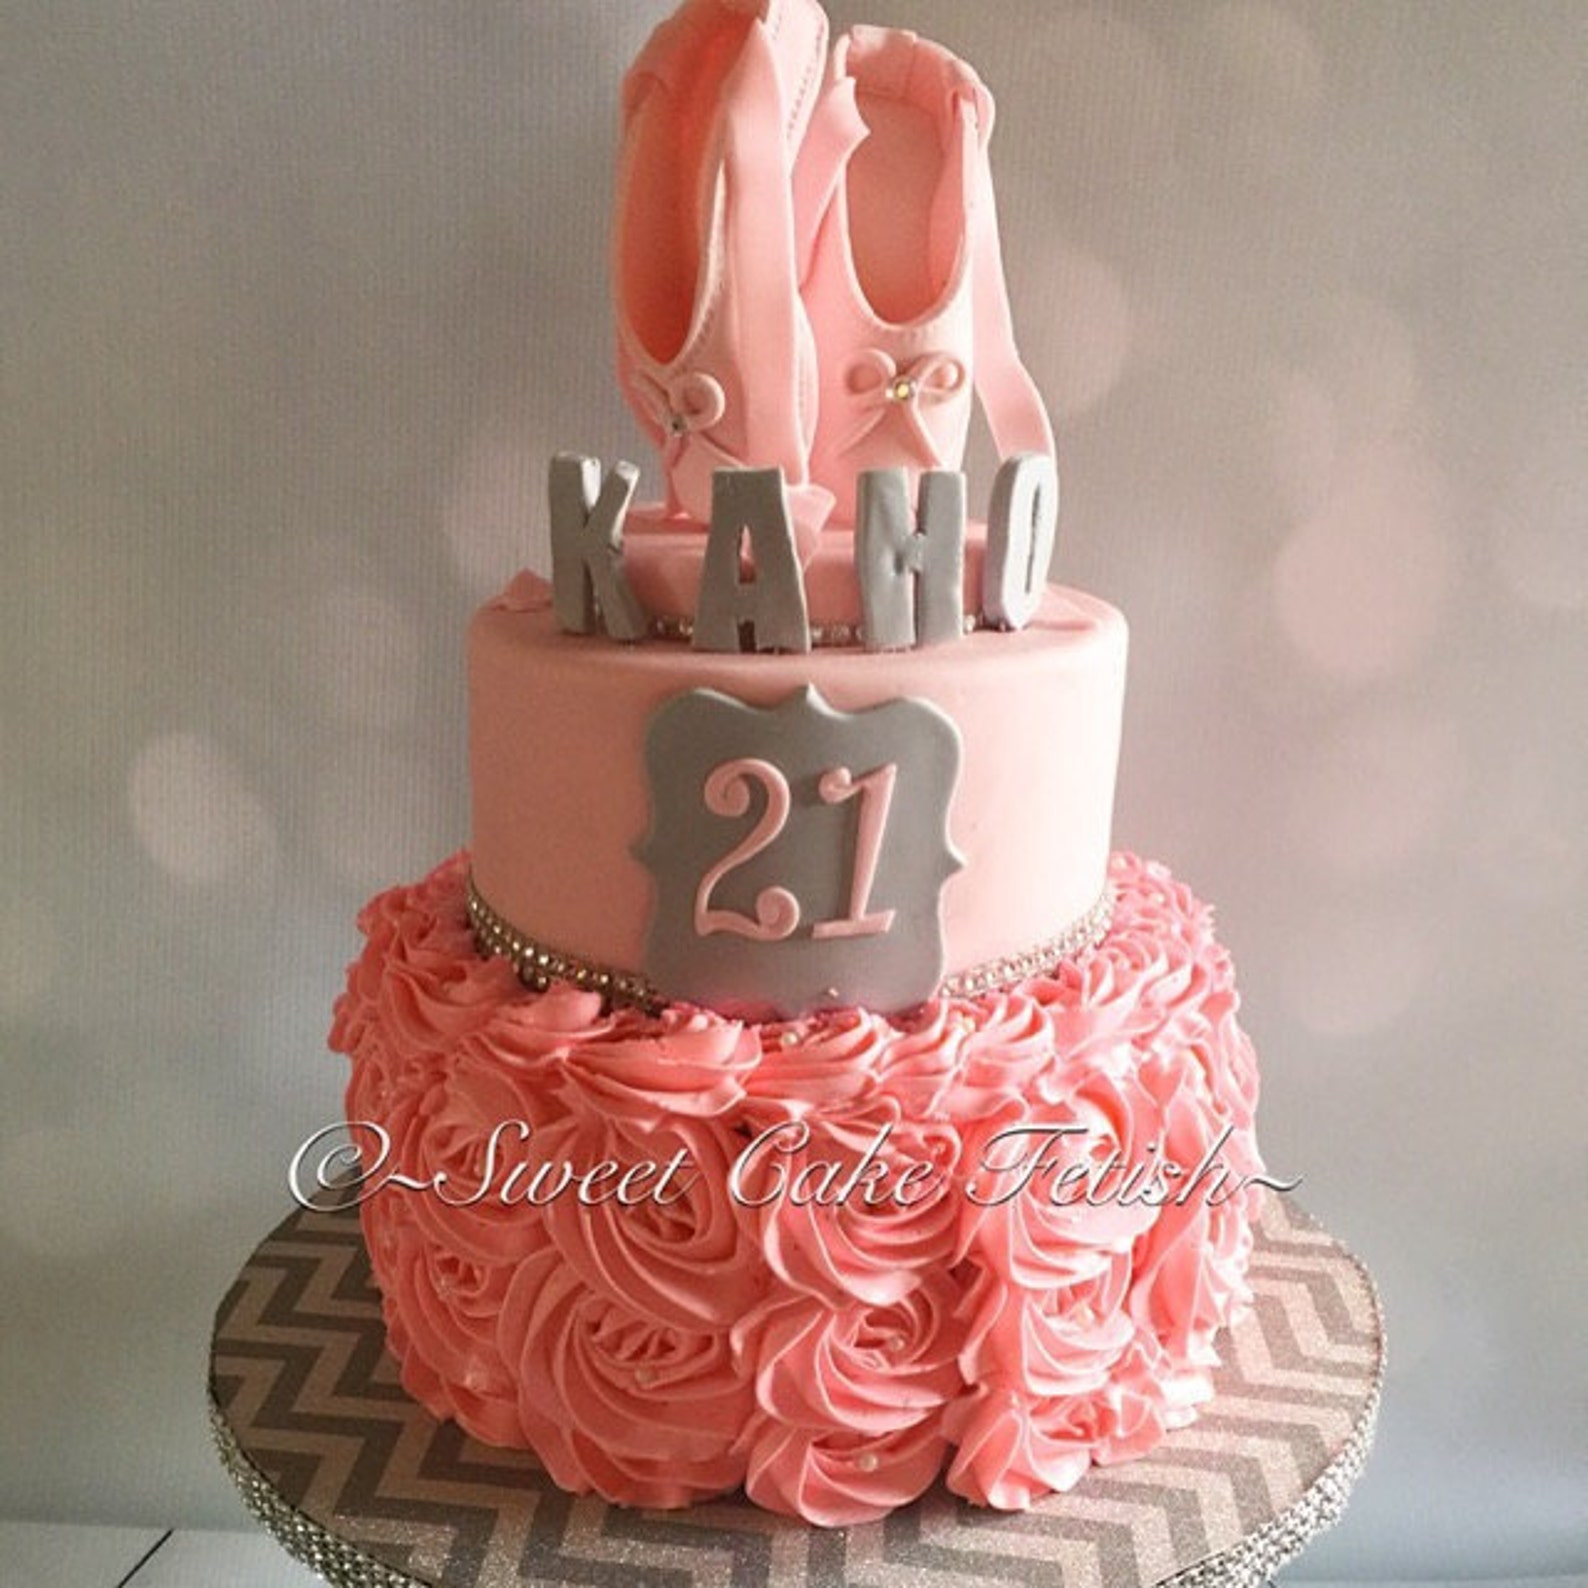 ballerina cake topper pink ballet shoes cake topper birthday cake topper ballerina cake decorations ballerina birthday decor bal